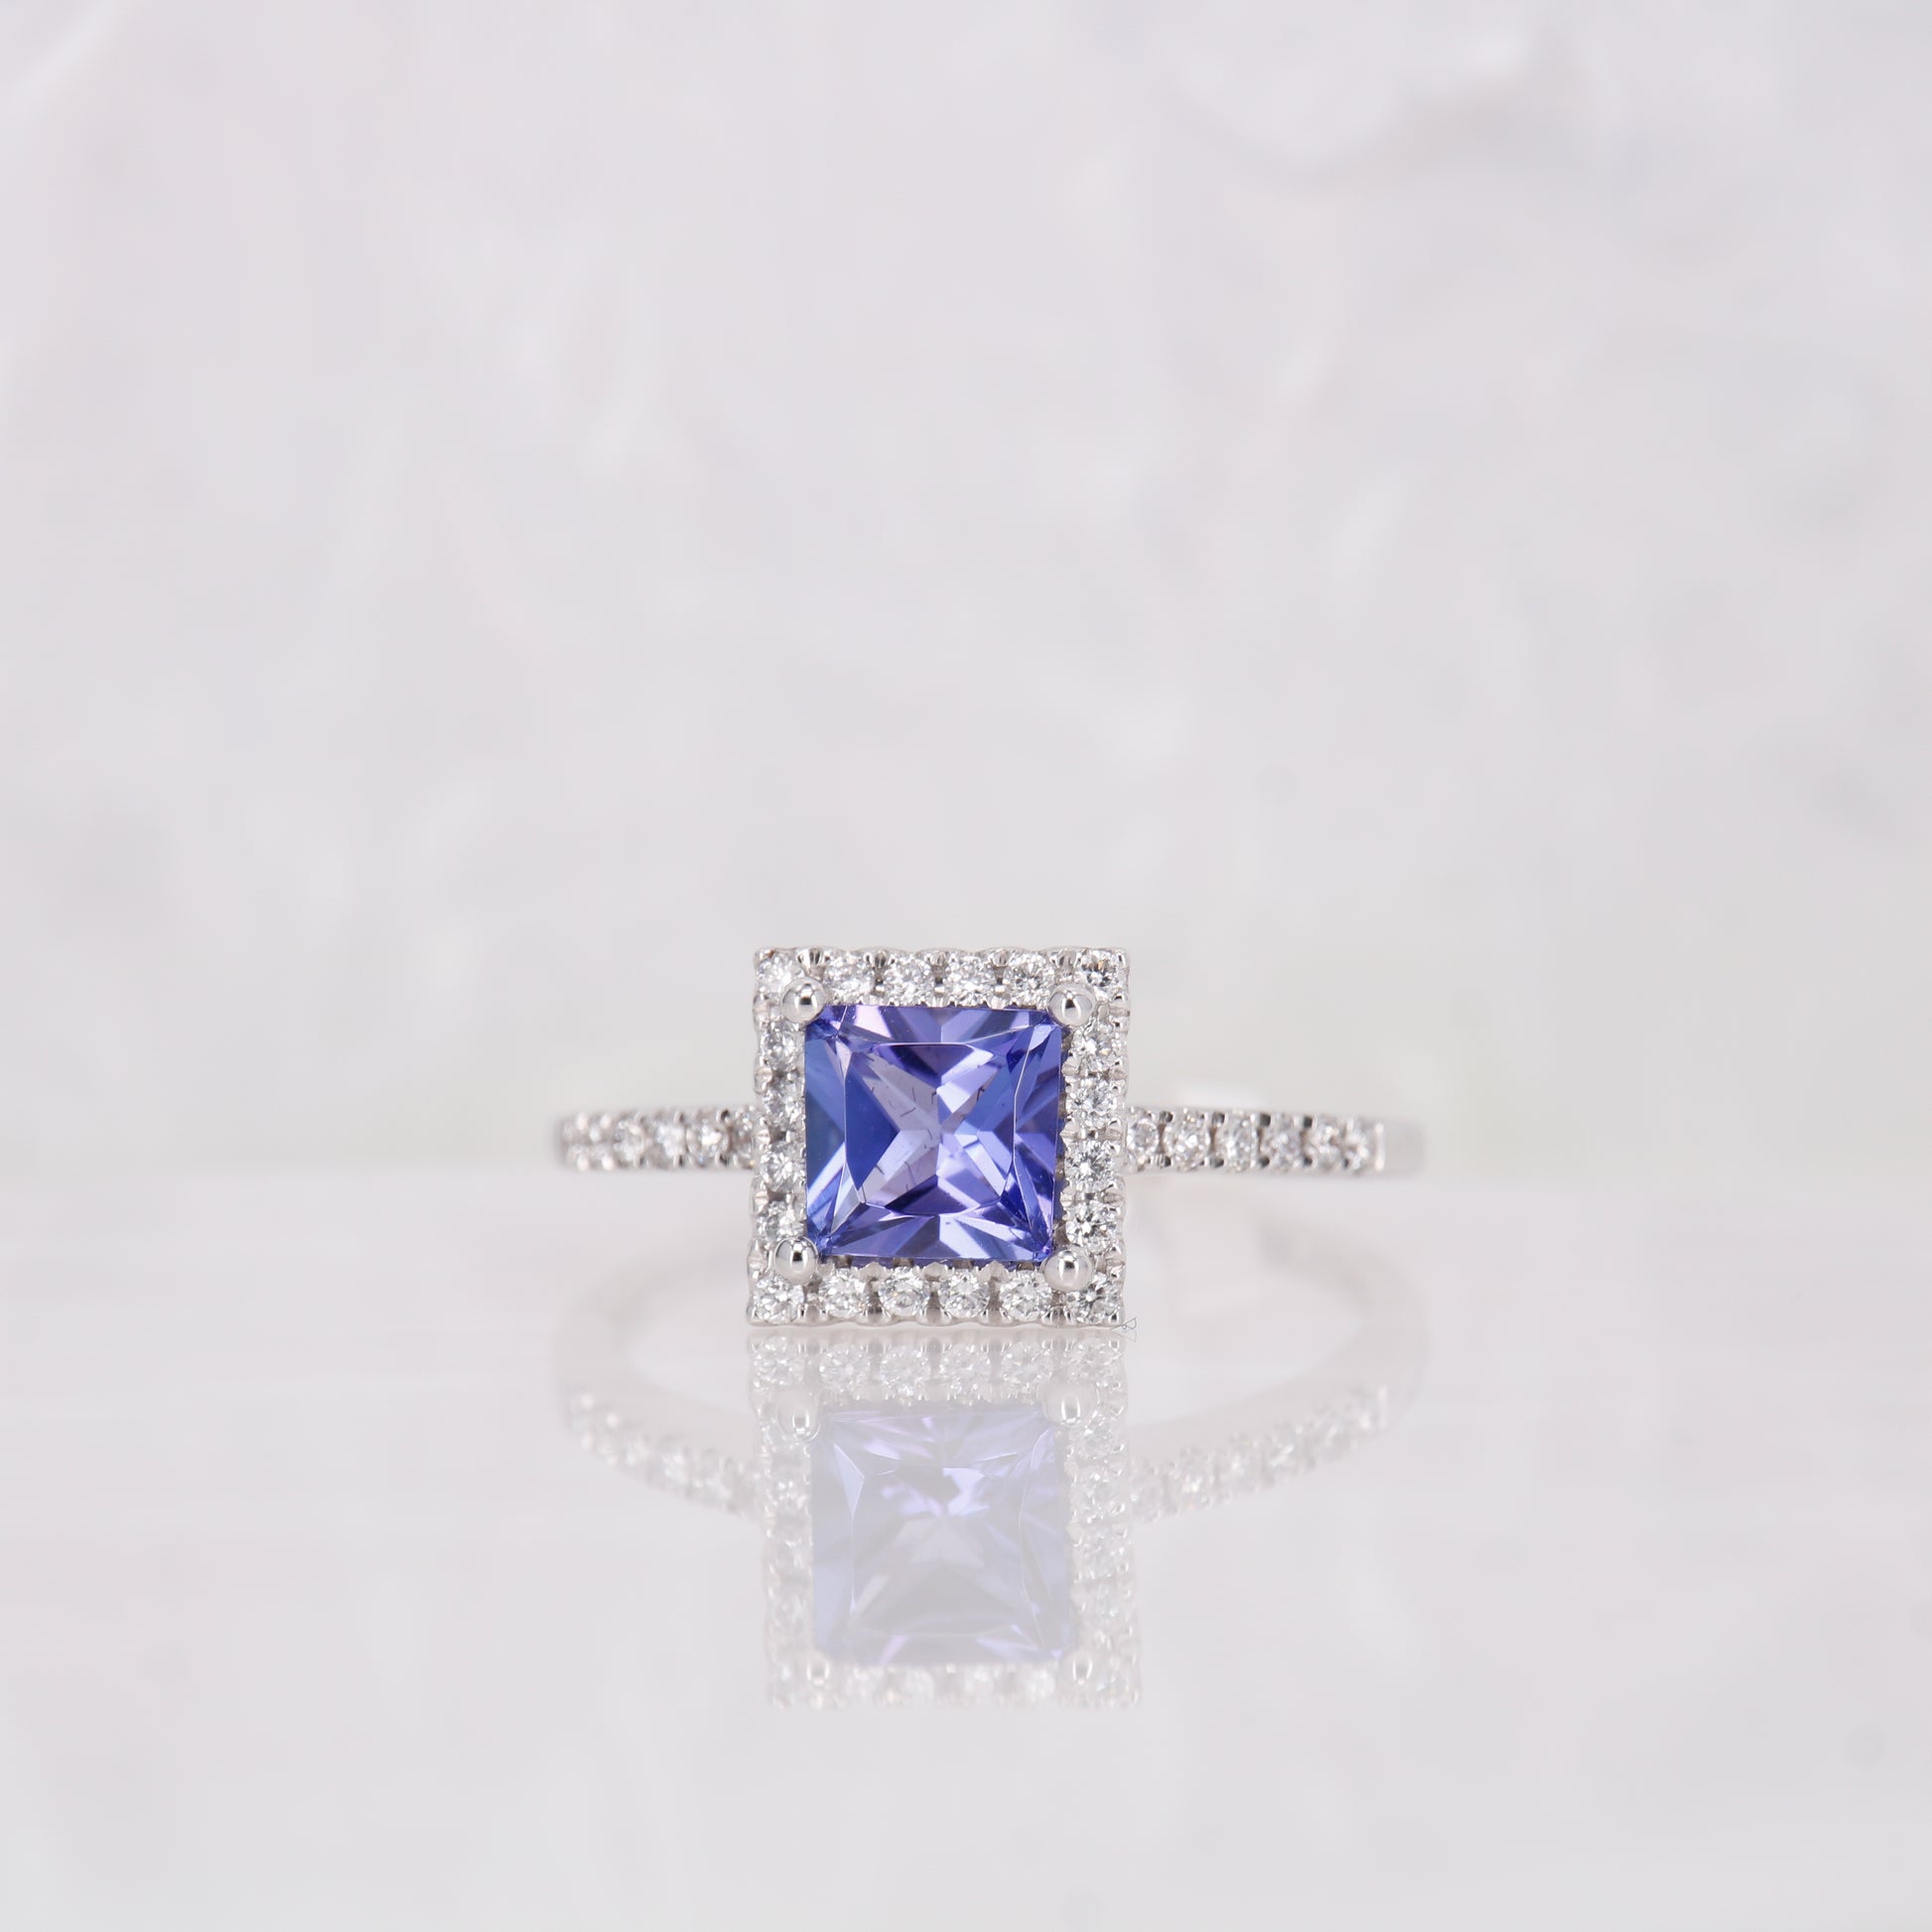 Tanzanite and Diamond Engagement Ring, set in 18ct white gold diamond halo. Princess cut tanzanite. 